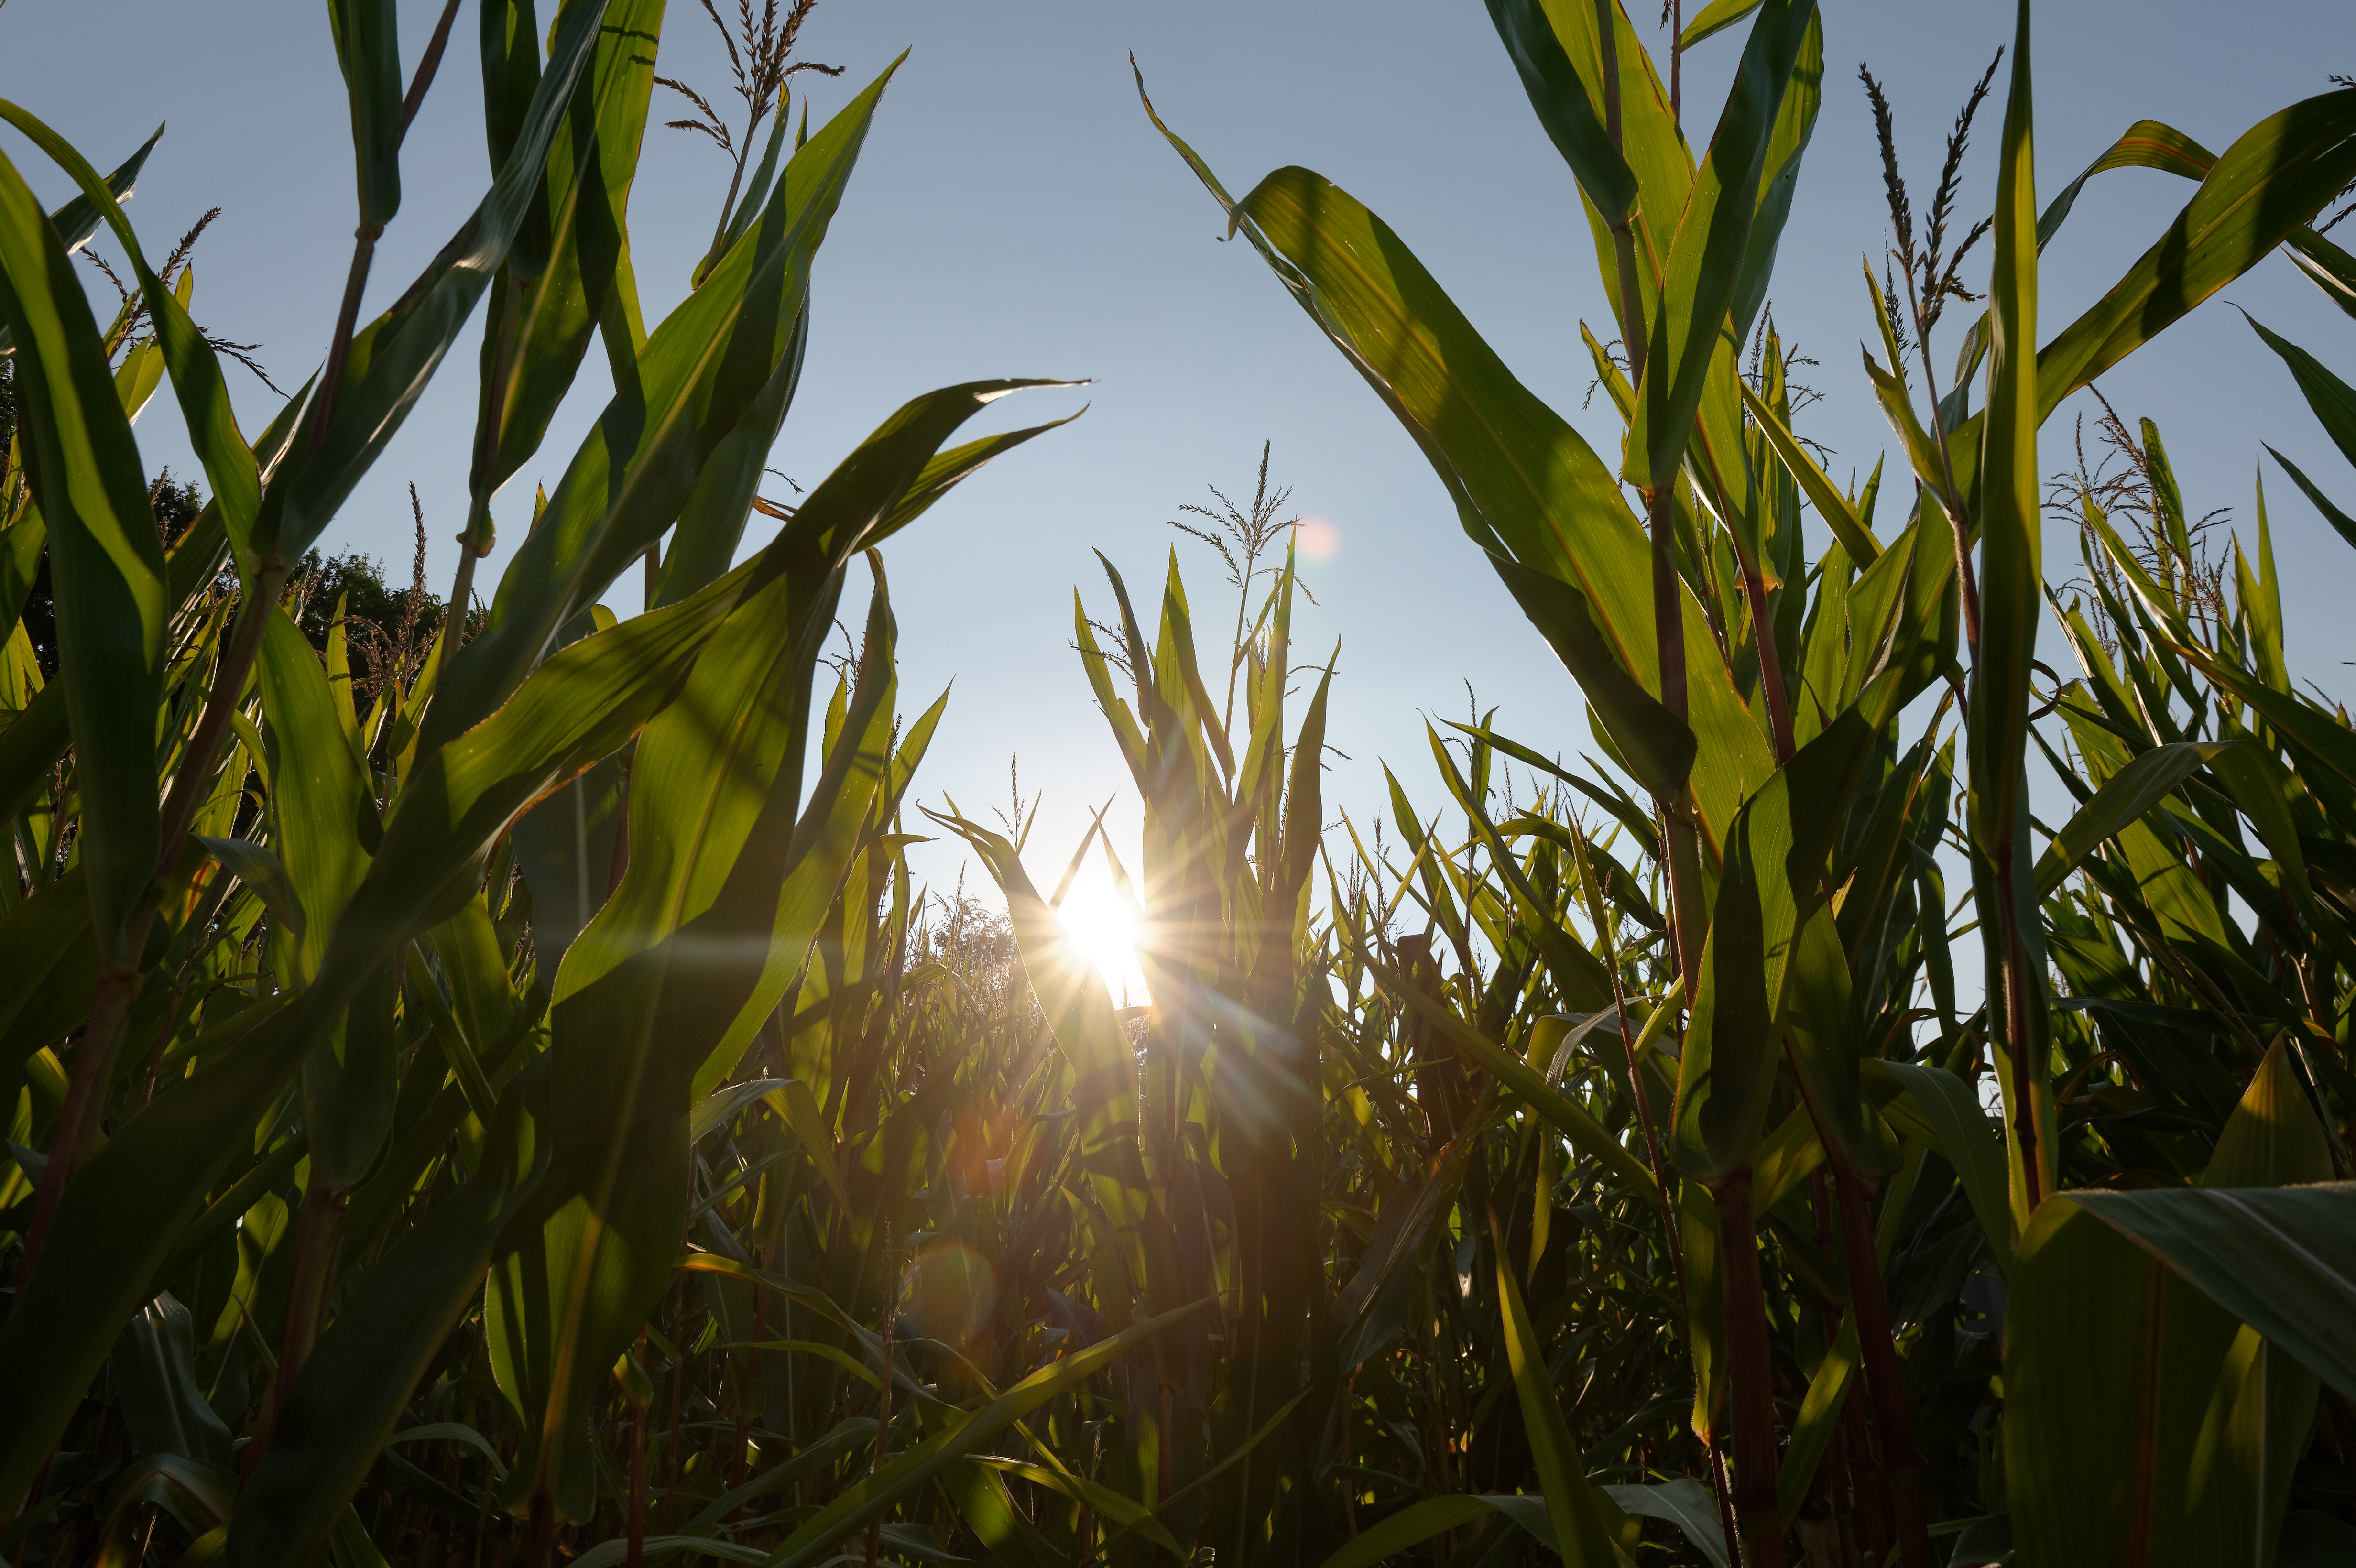 Corn field in the sun